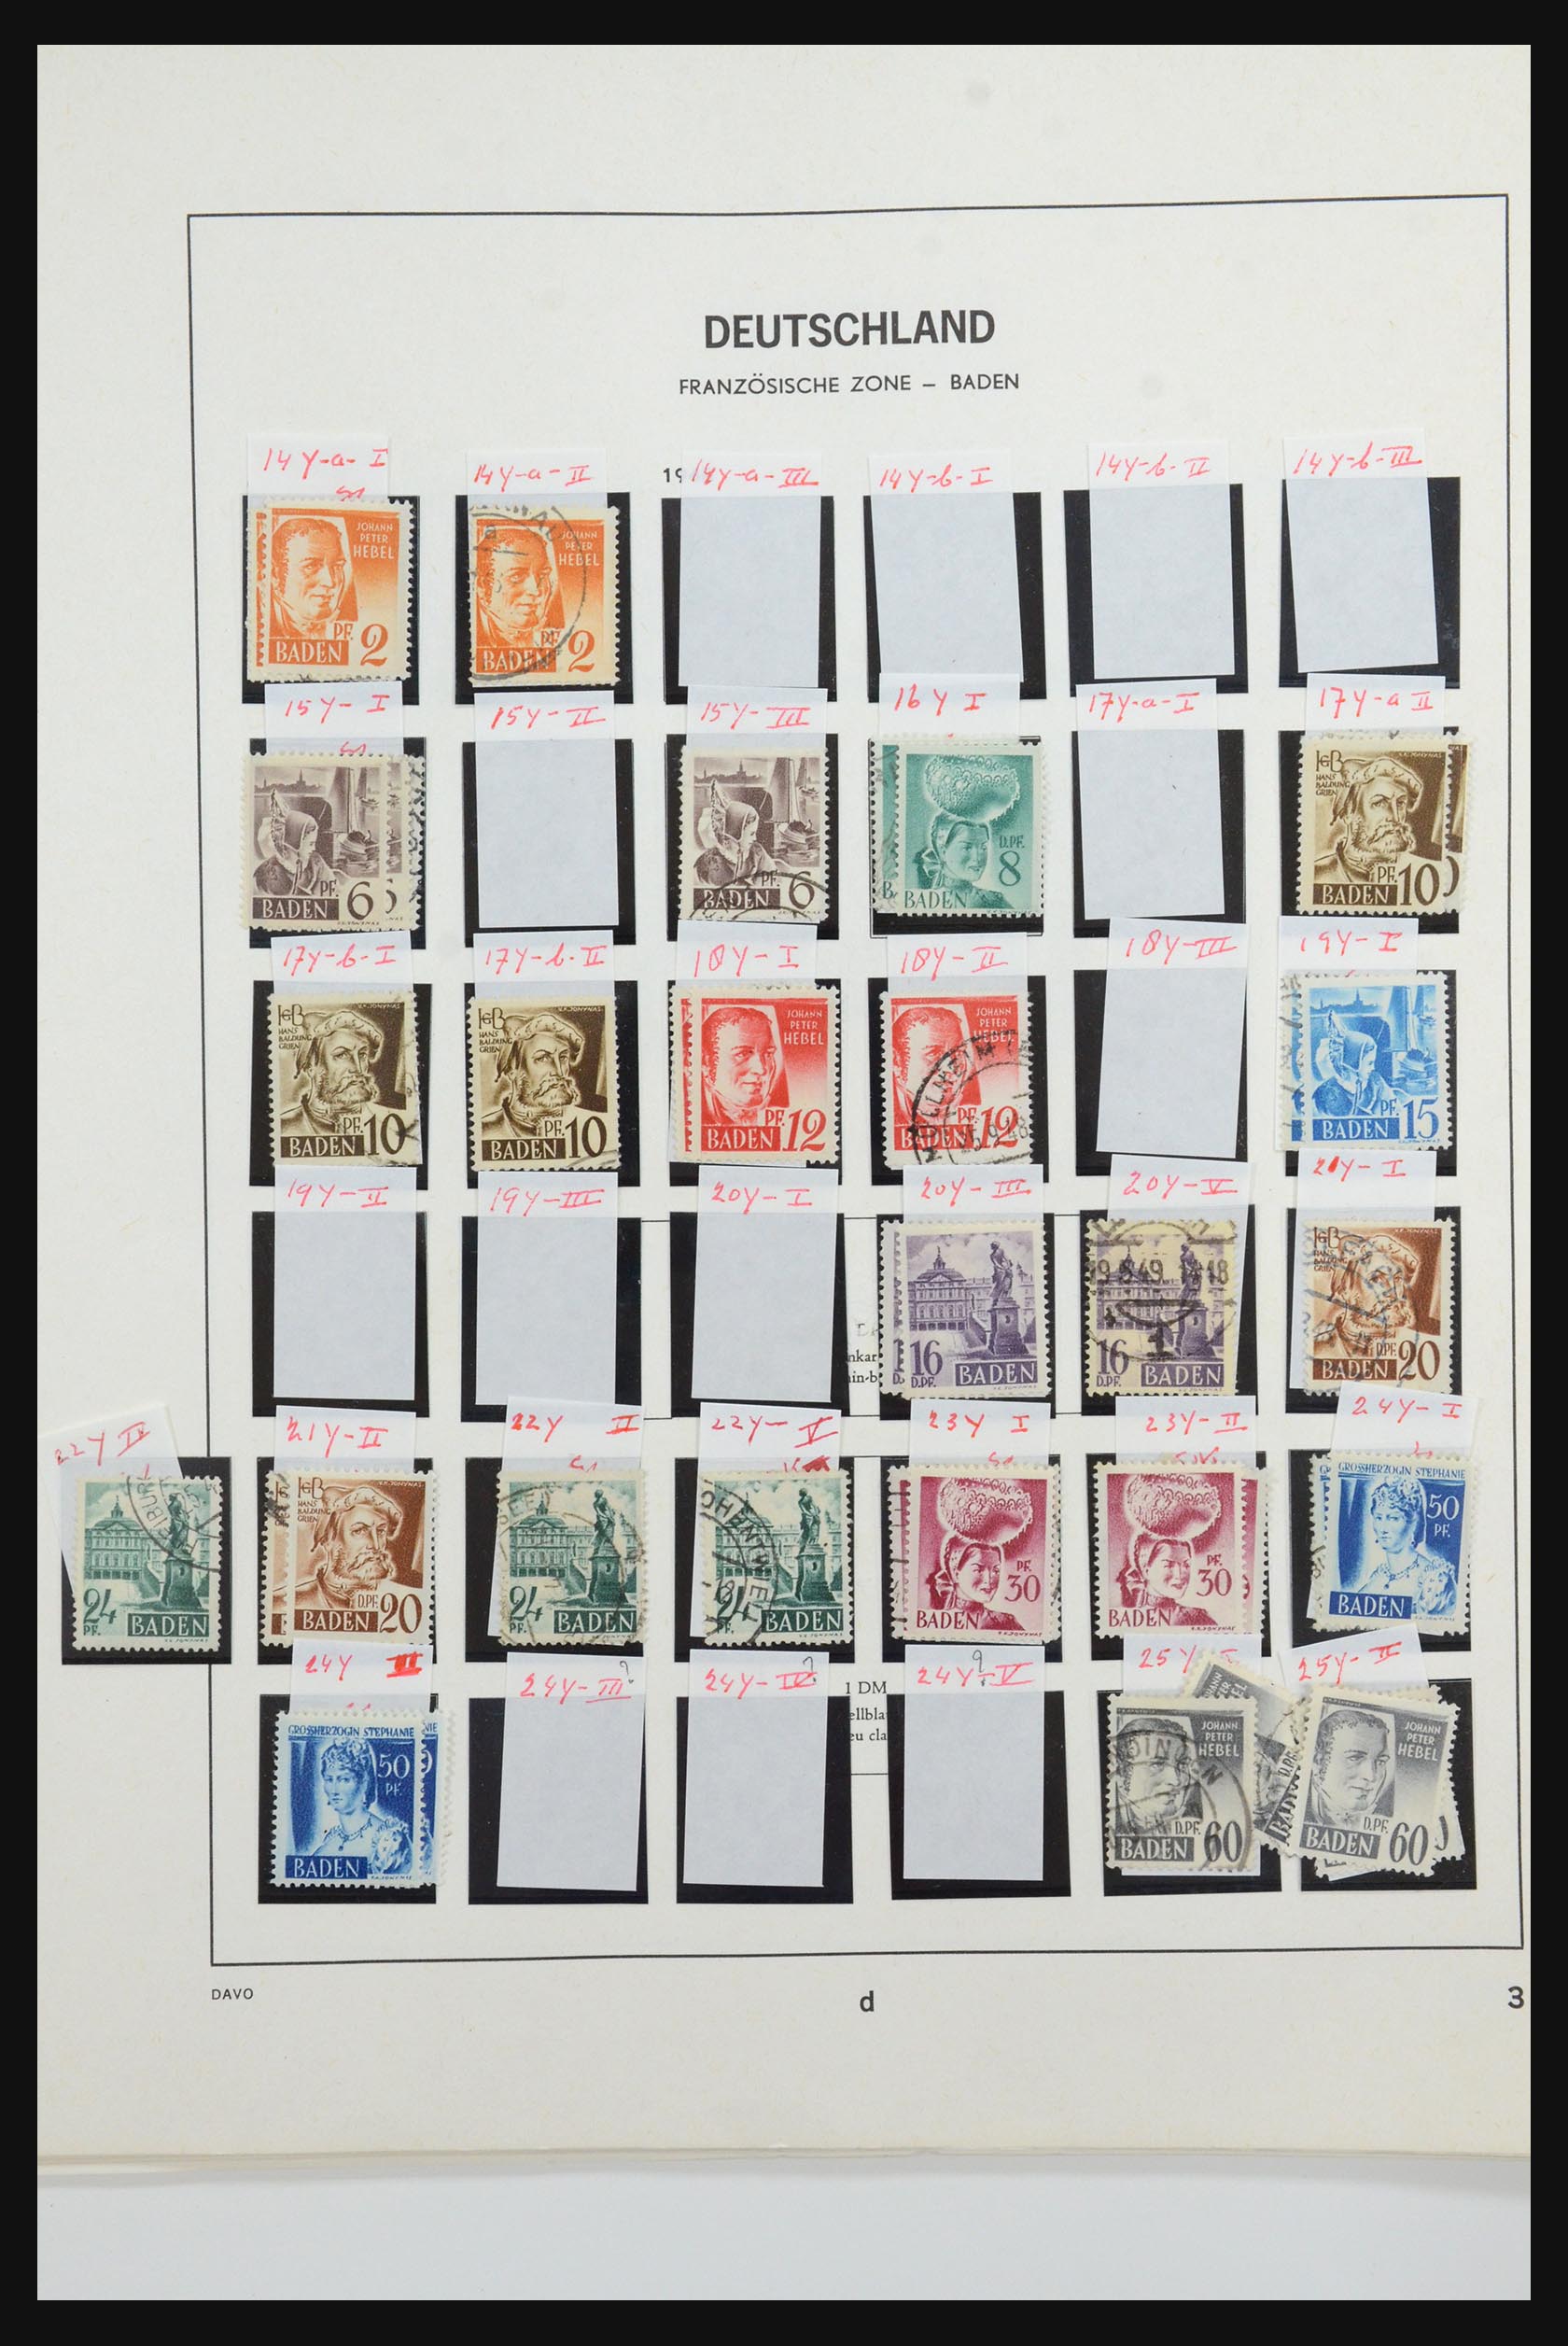 31635 011 - 31635 Bundespost 1949-2000.